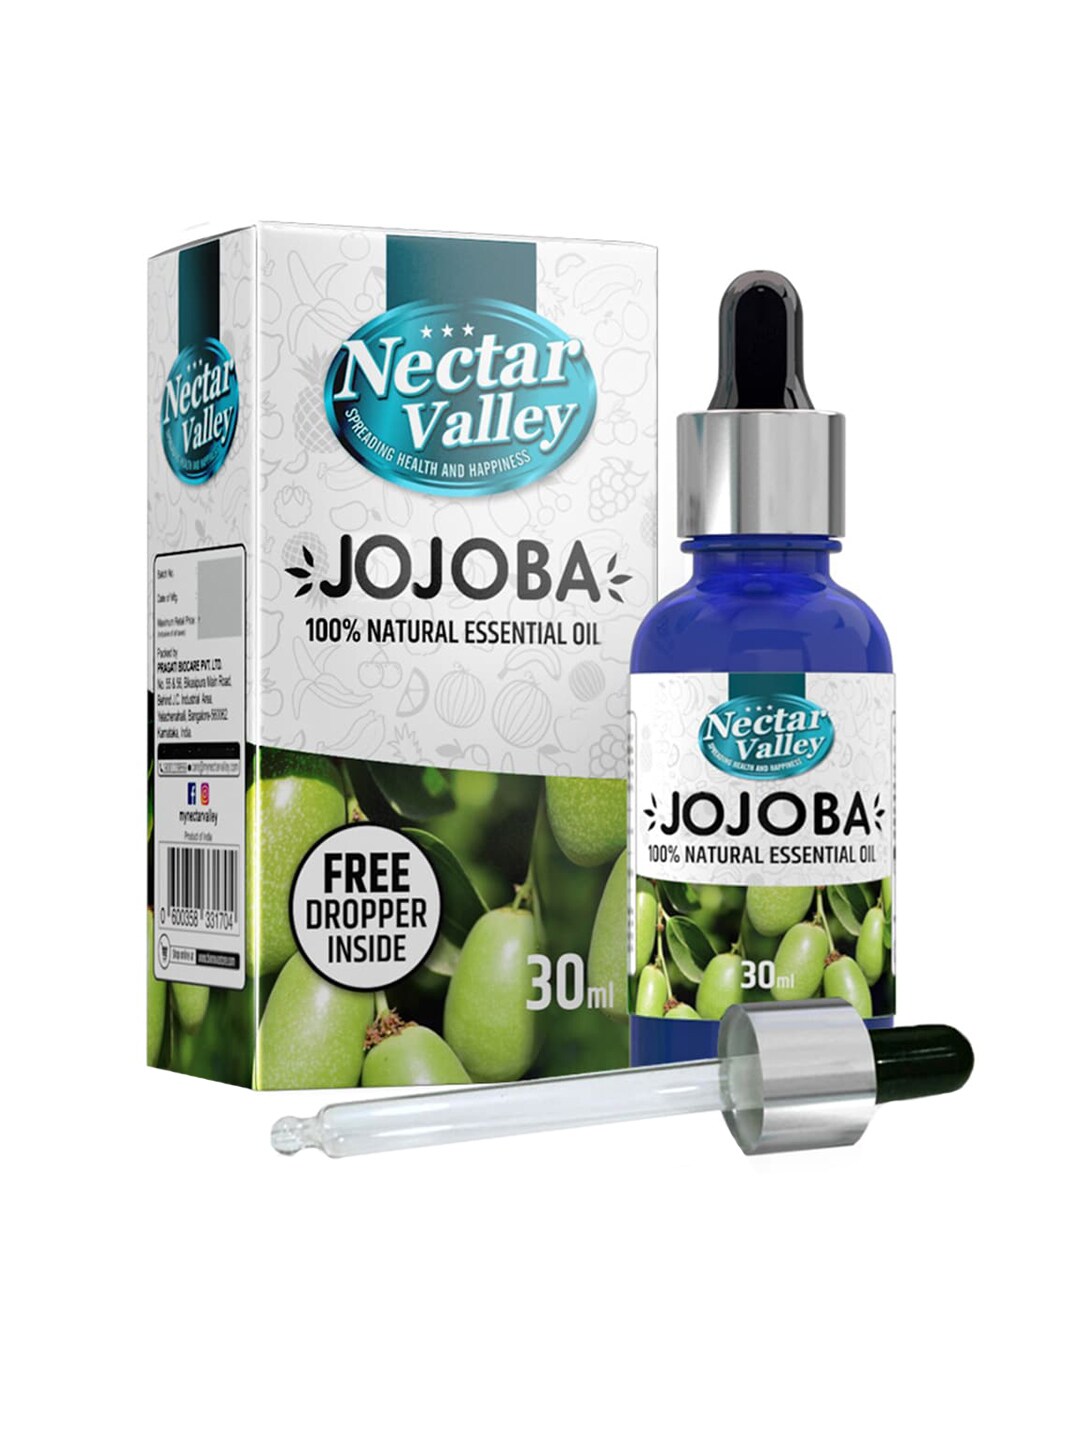 Nectar Valley Jojoba Essential Oil 30 ml Price in India